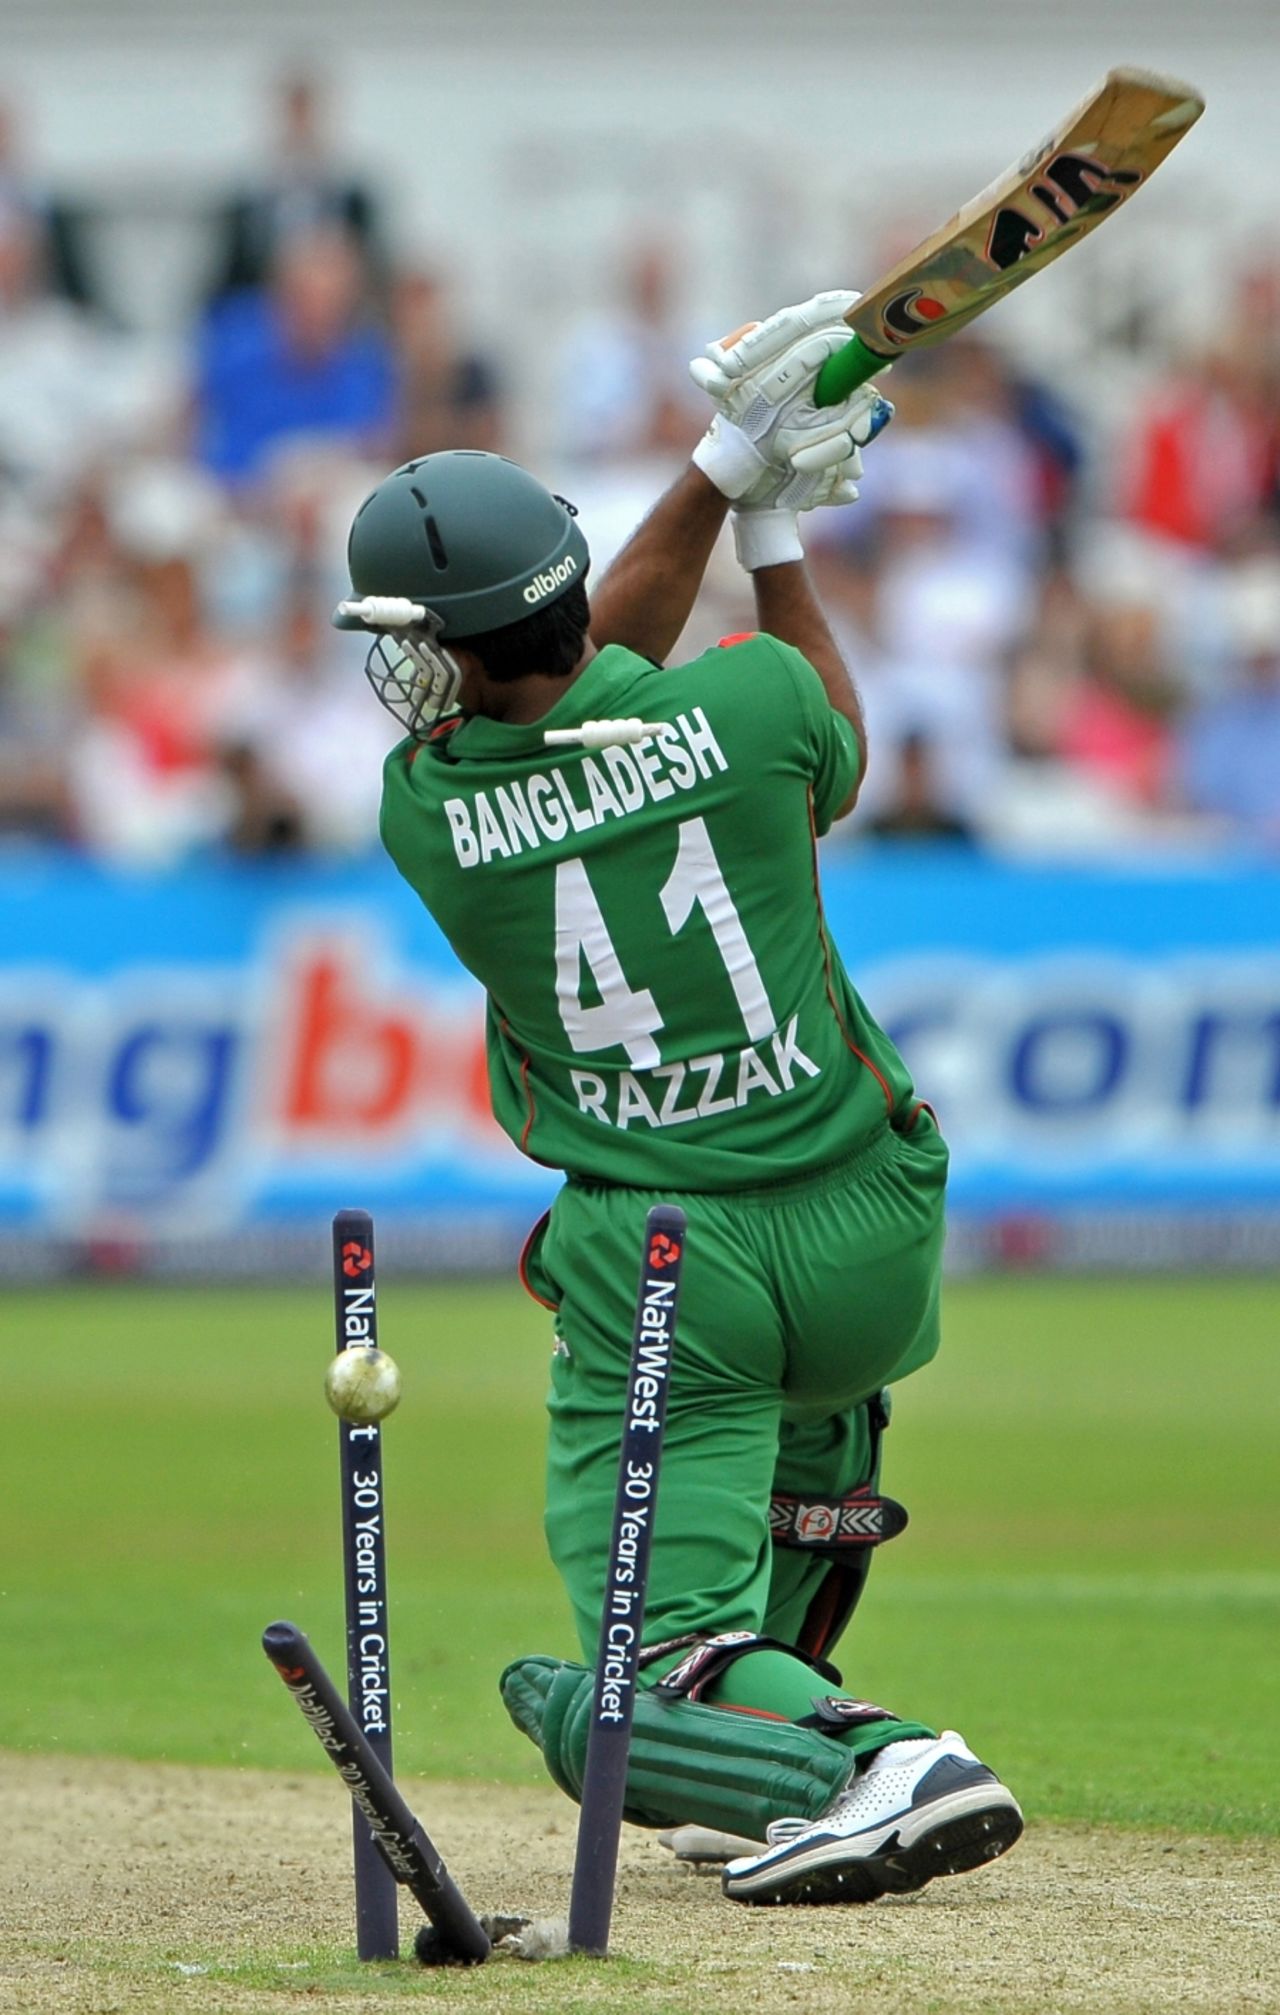 Abdur Razzak was bowled off the last ball as Bangladesh reached 250 for 9, England v Bangldesh, 1st ODI, Trent Bridge, July 8, 2010